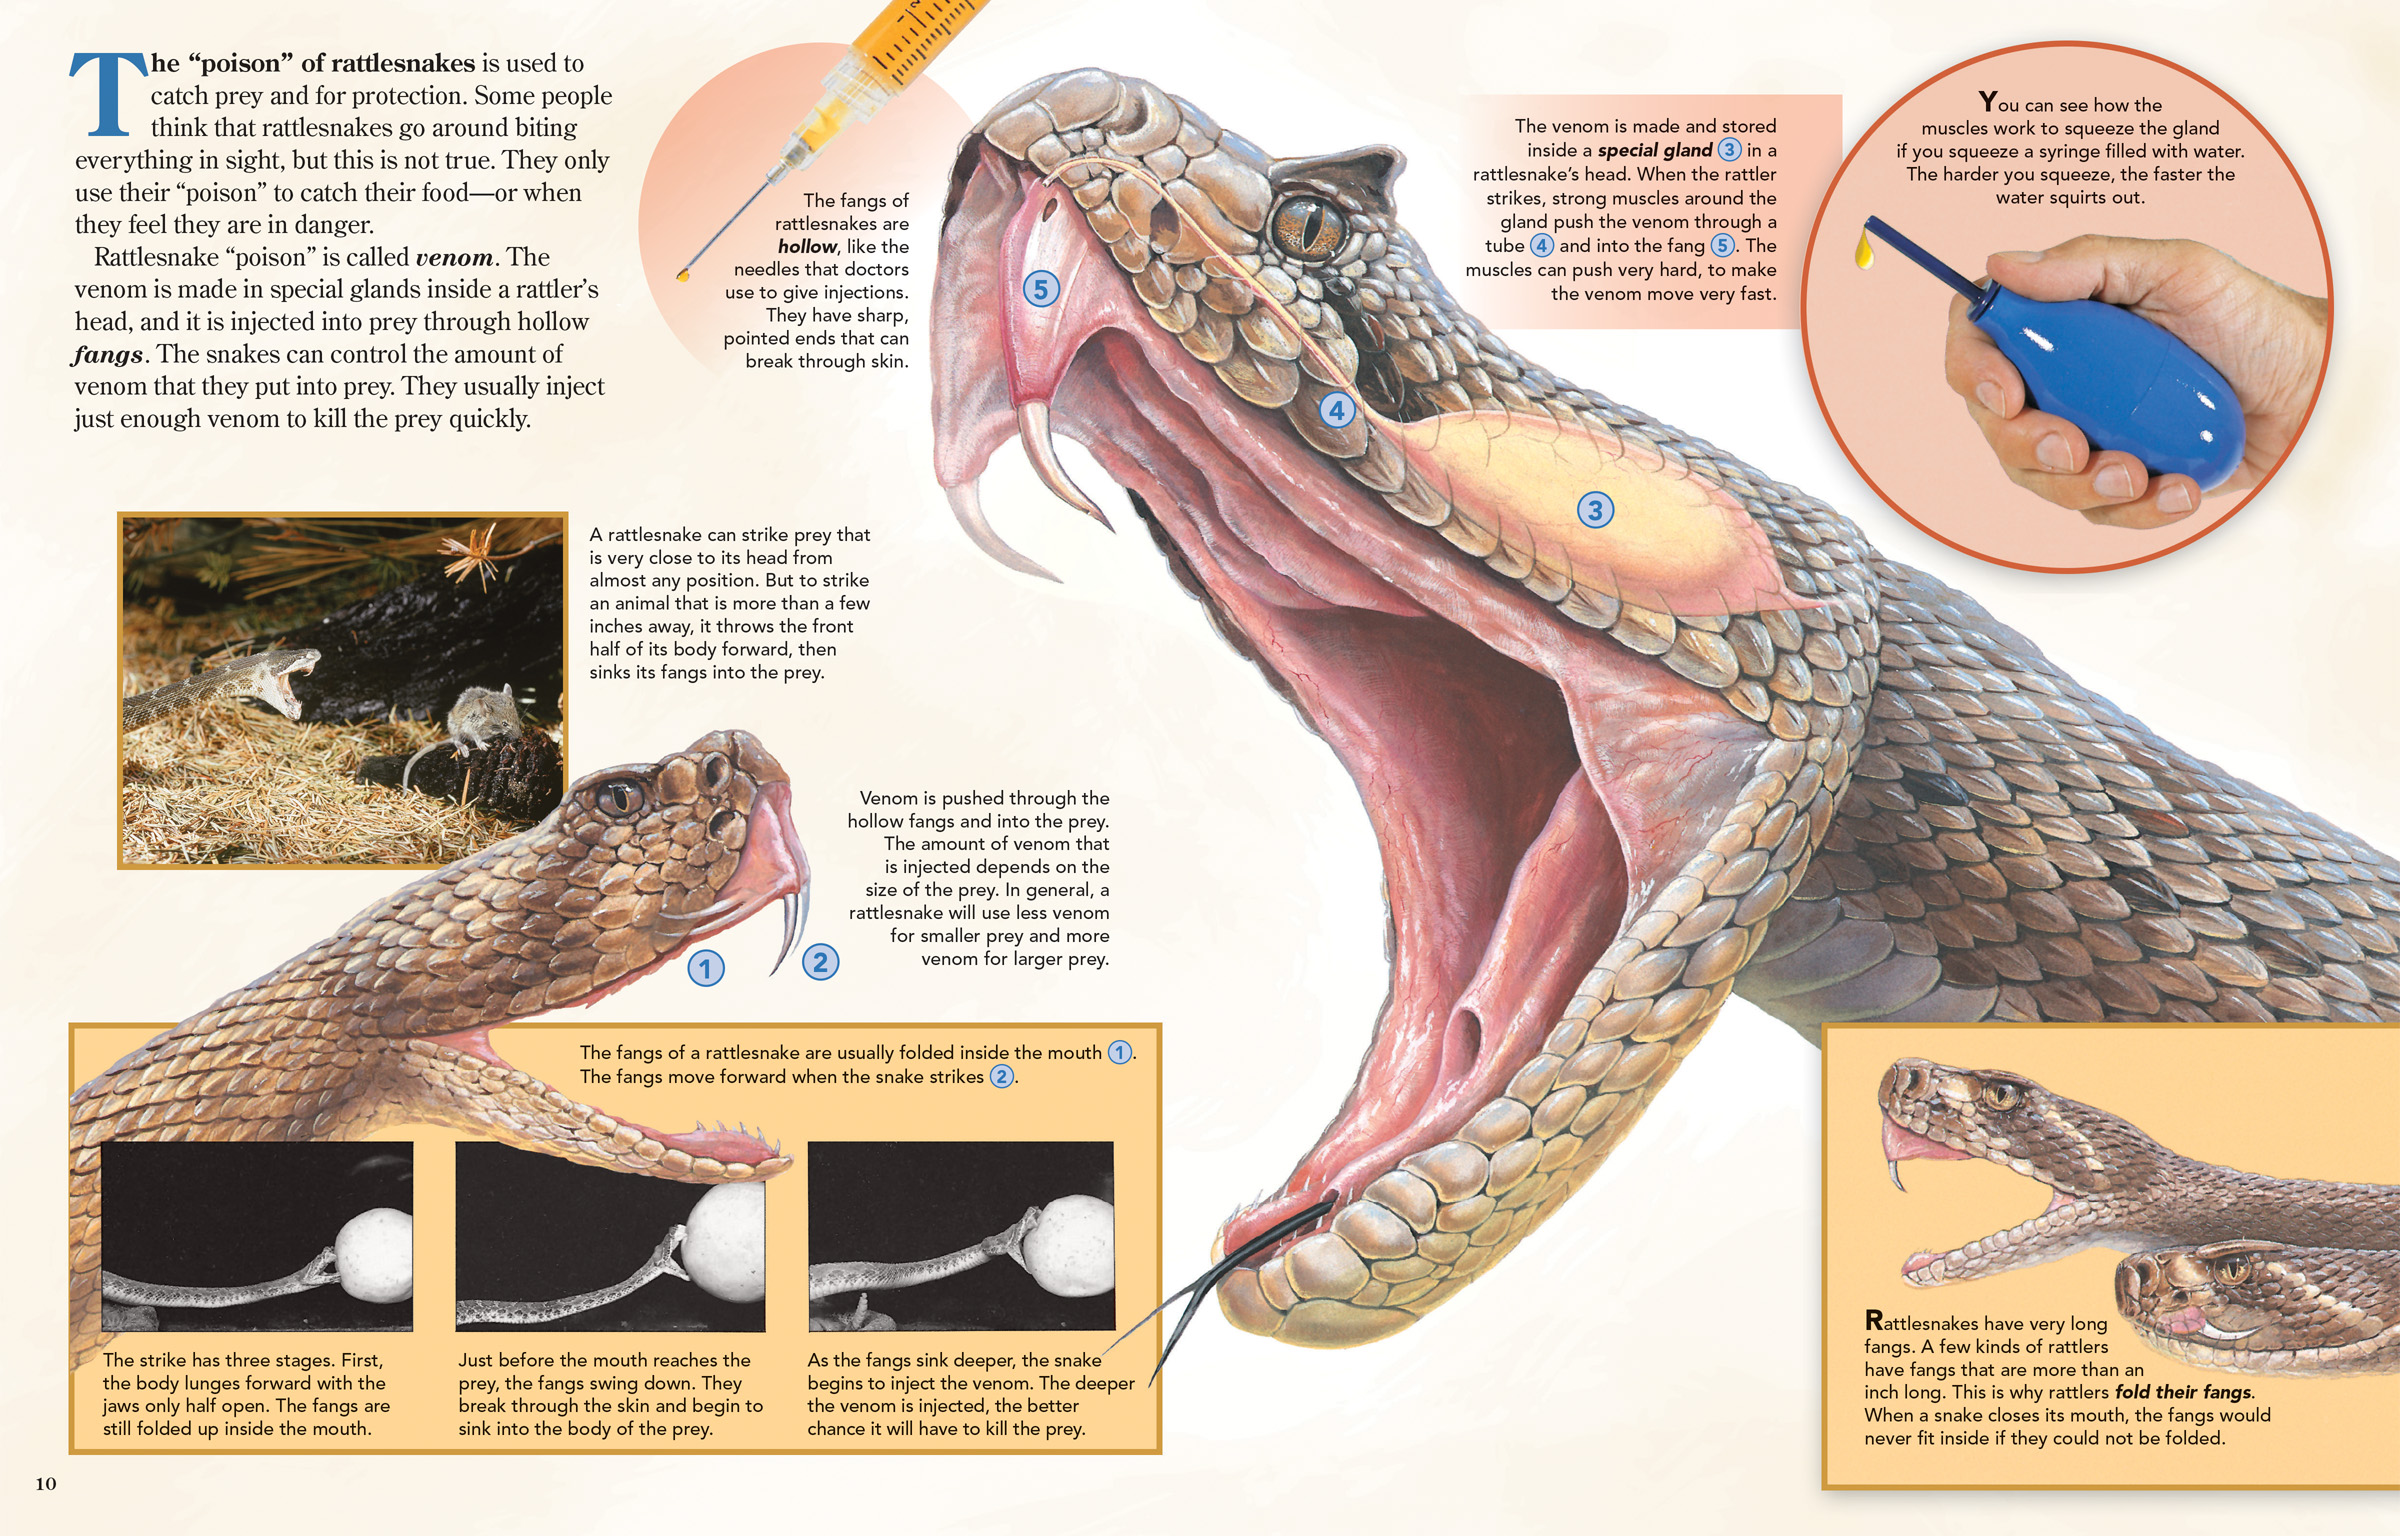 What Kind of Venom Does a Rattlesnake Have?